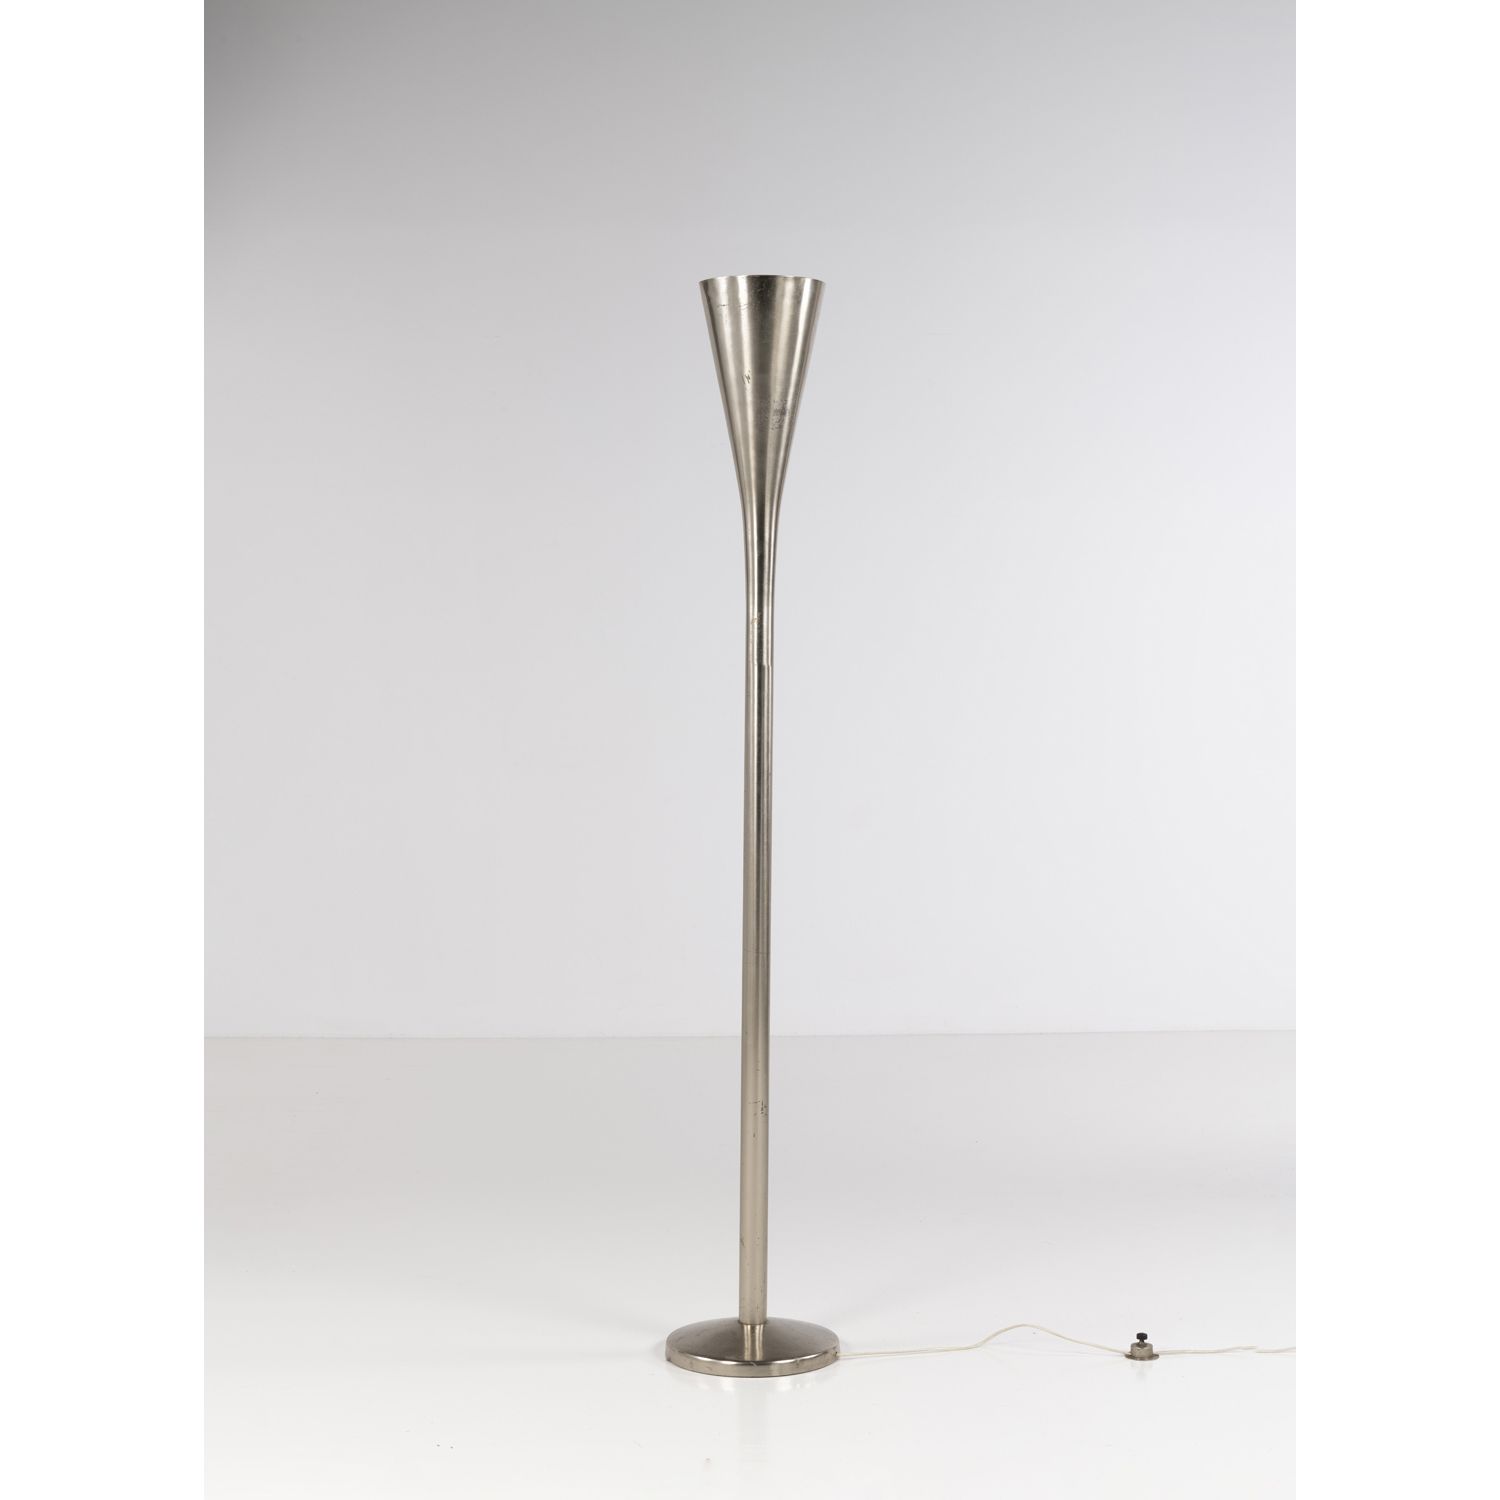 Null Pietro Chiesa (1892-1948)

Stehlampe

Metall

Ausgabe Luigi Fontana

Modell&hellip;